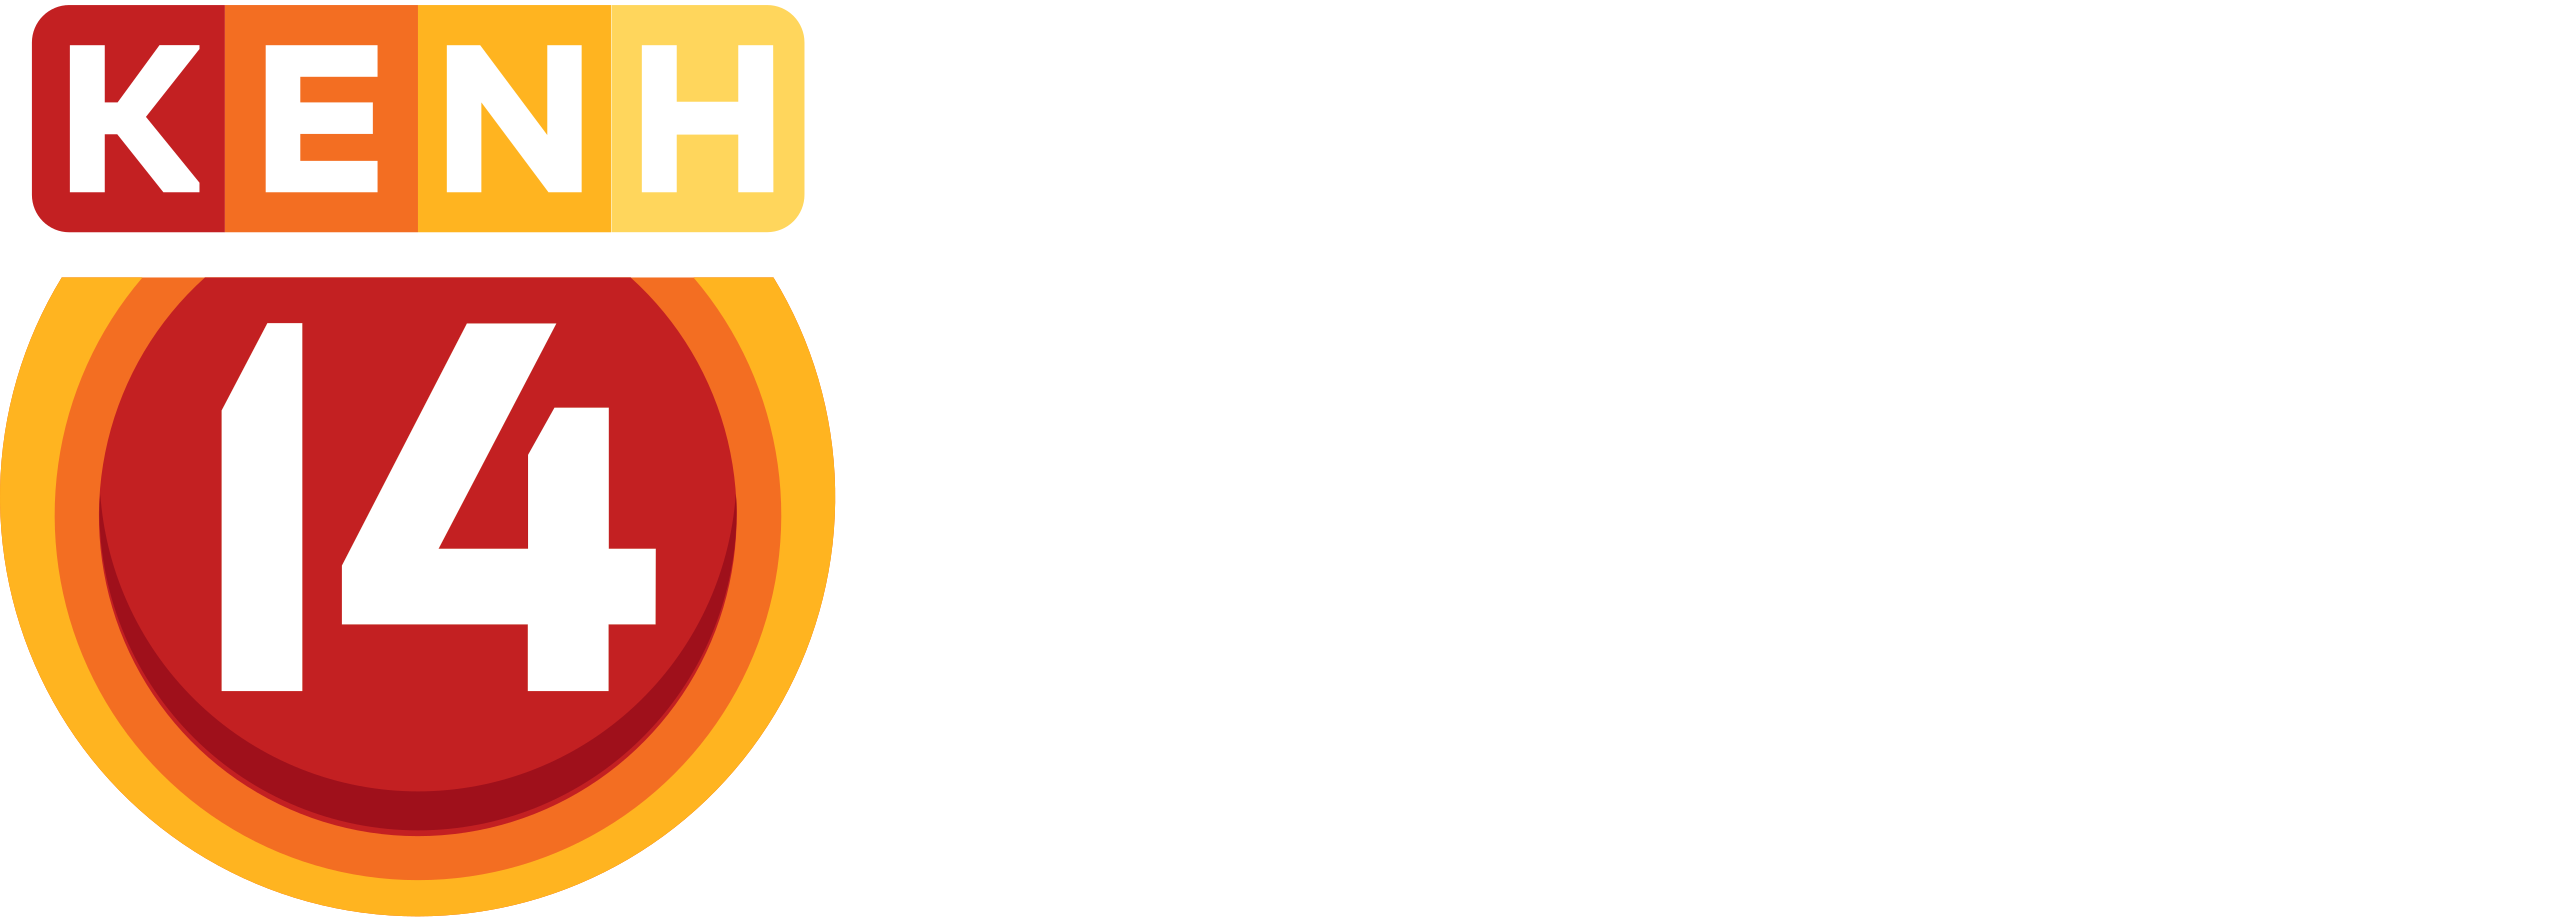 Logo_Kenh14.svg